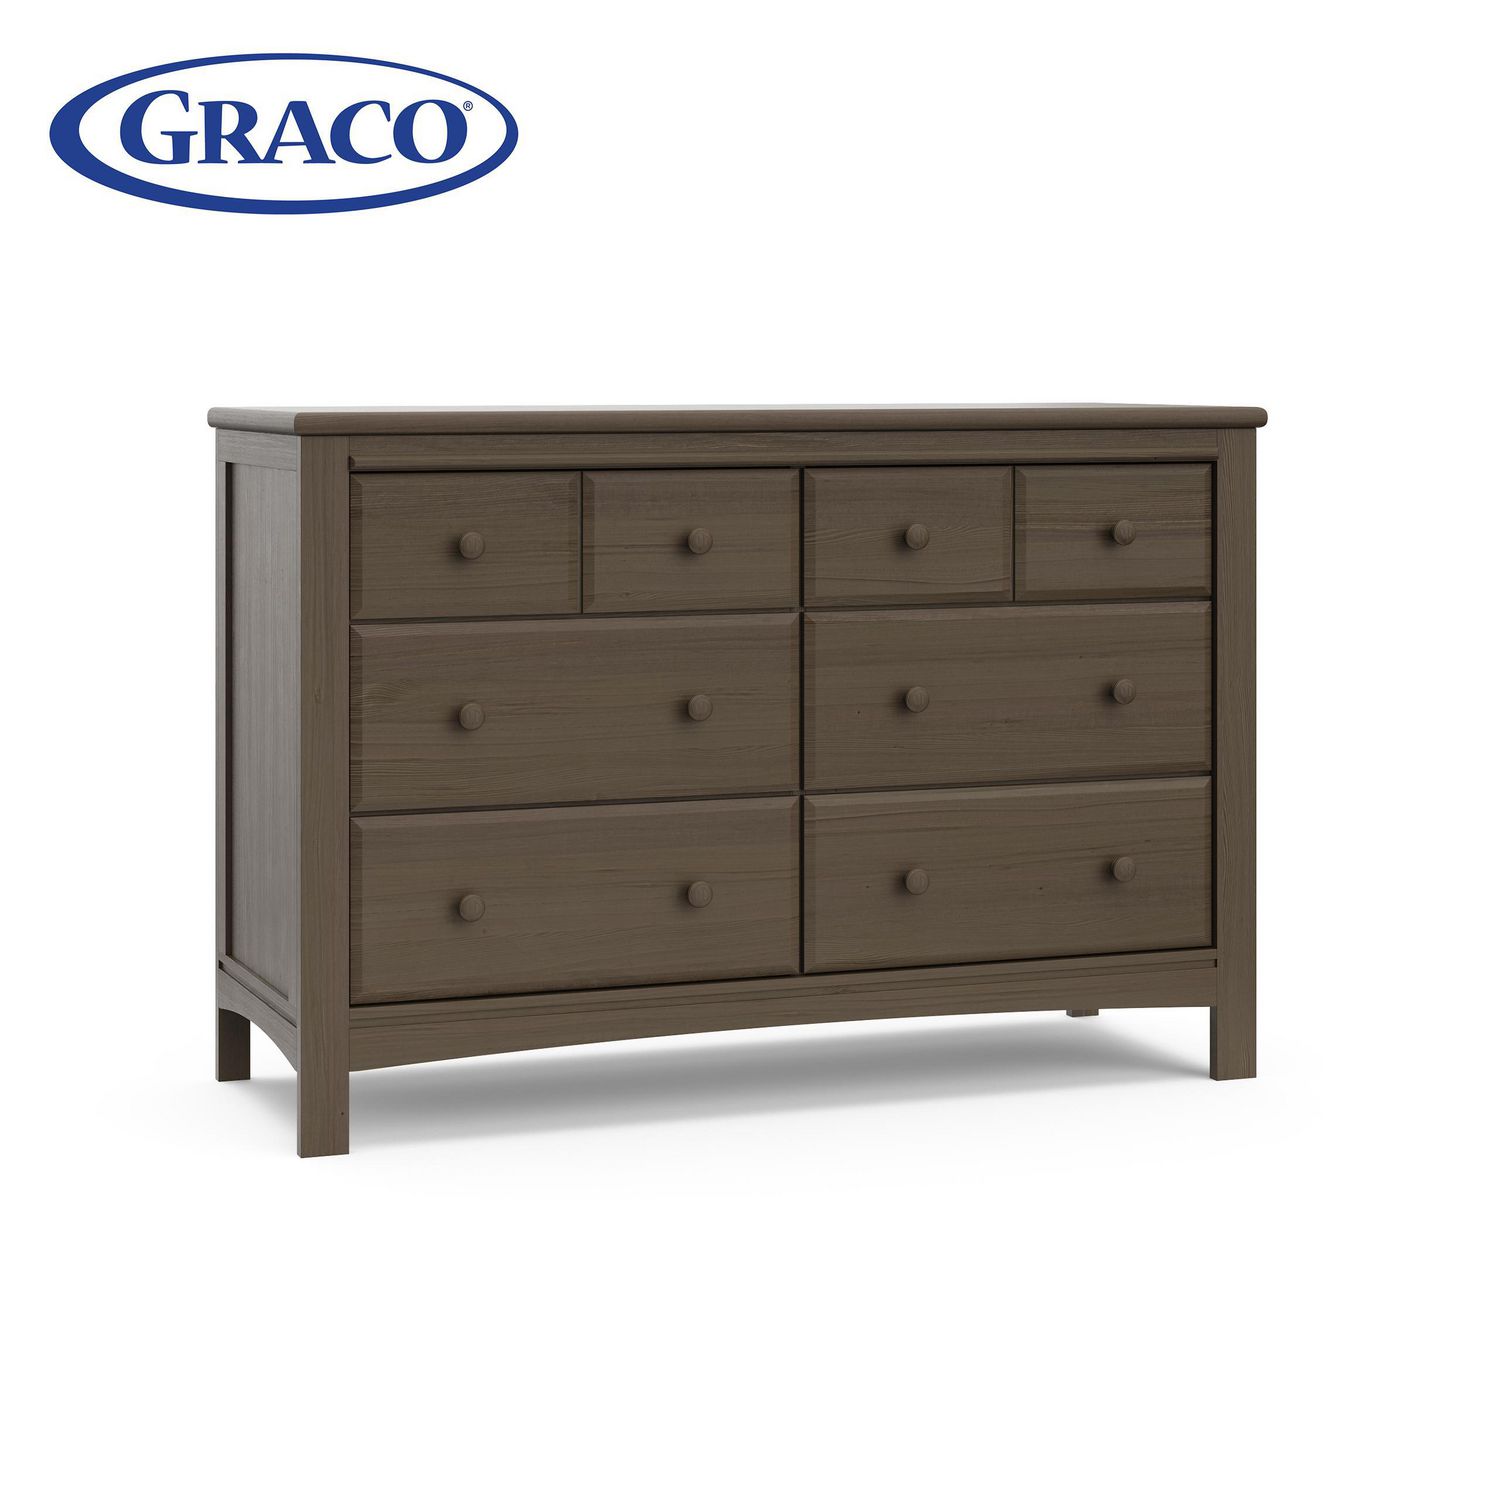 graco hadley dresser